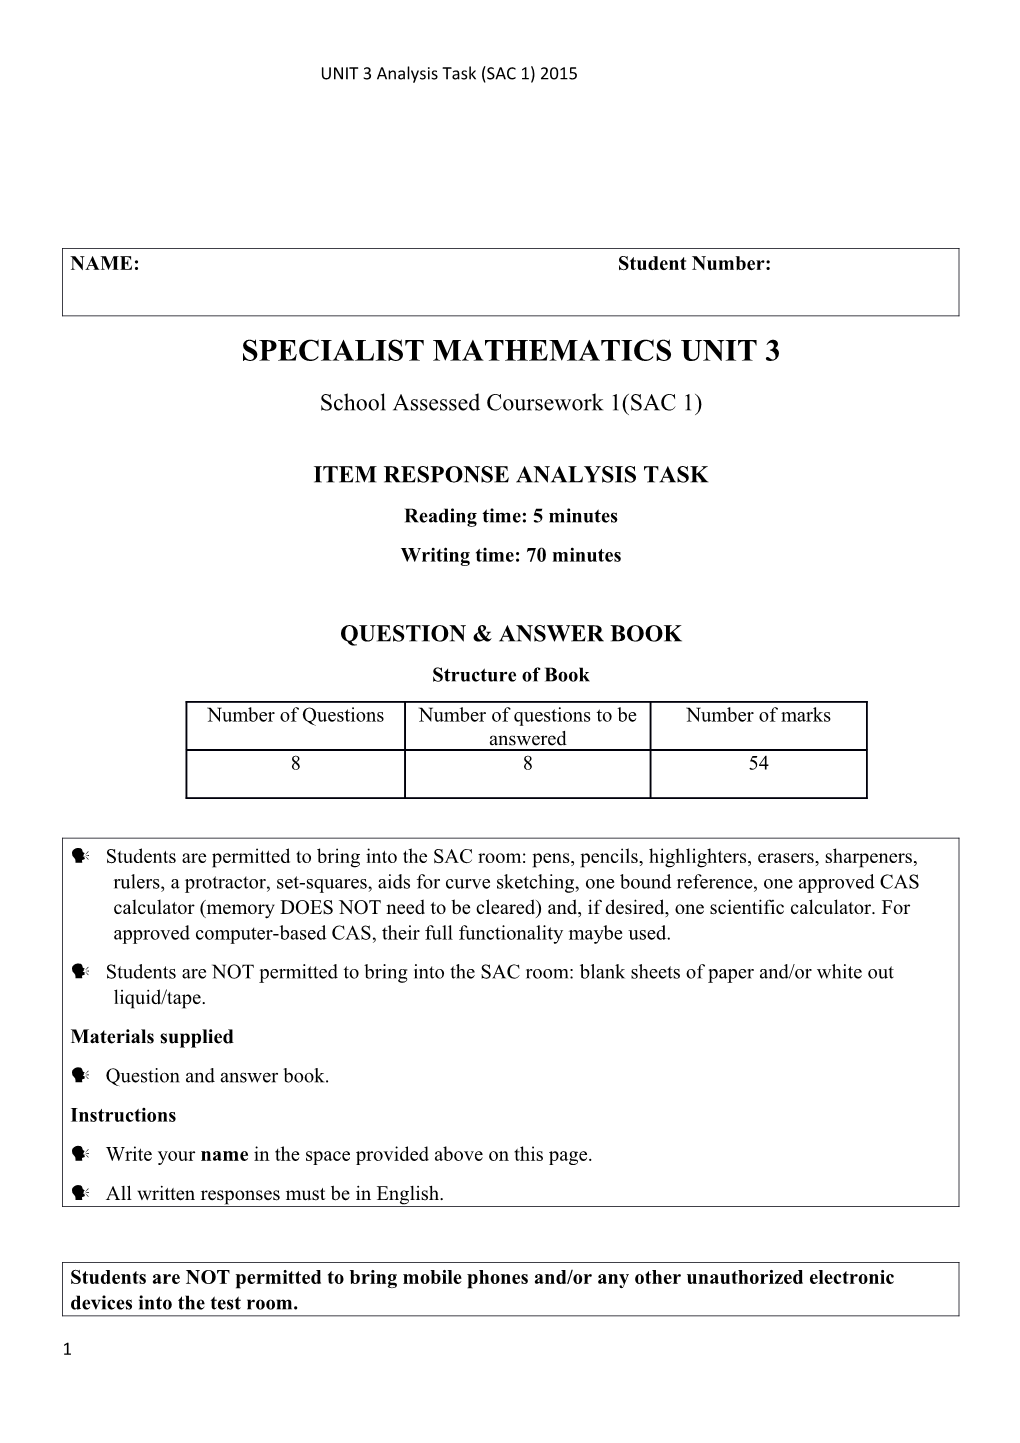 UNIT 3 Analysis Task (SAC 1) 2015